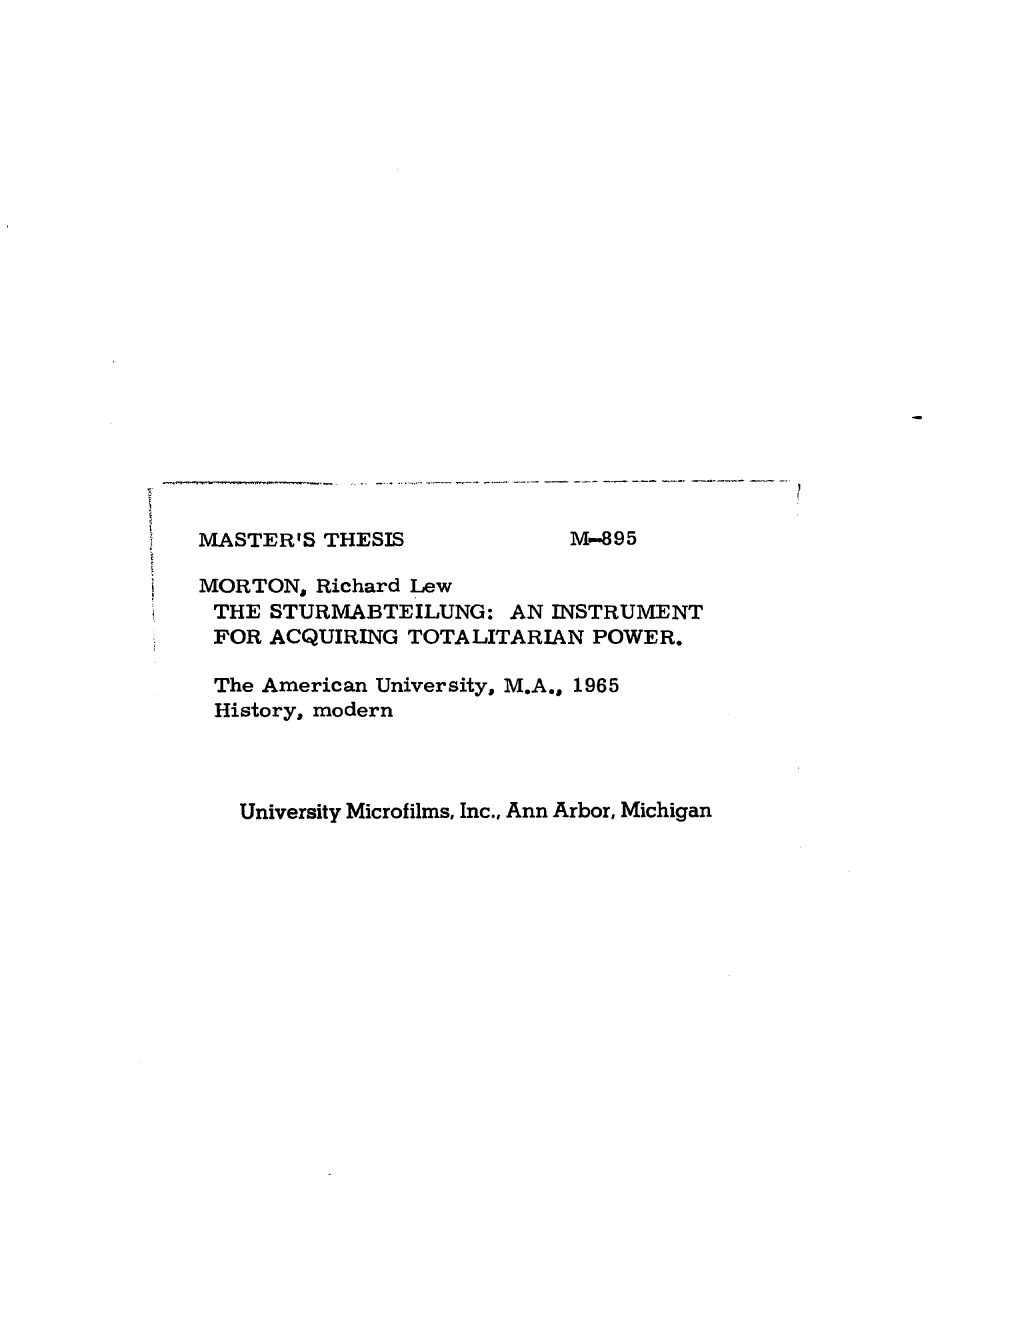 University Microfilms, Inc., Ann Arbor, Michigan the STURMABTEILUNG